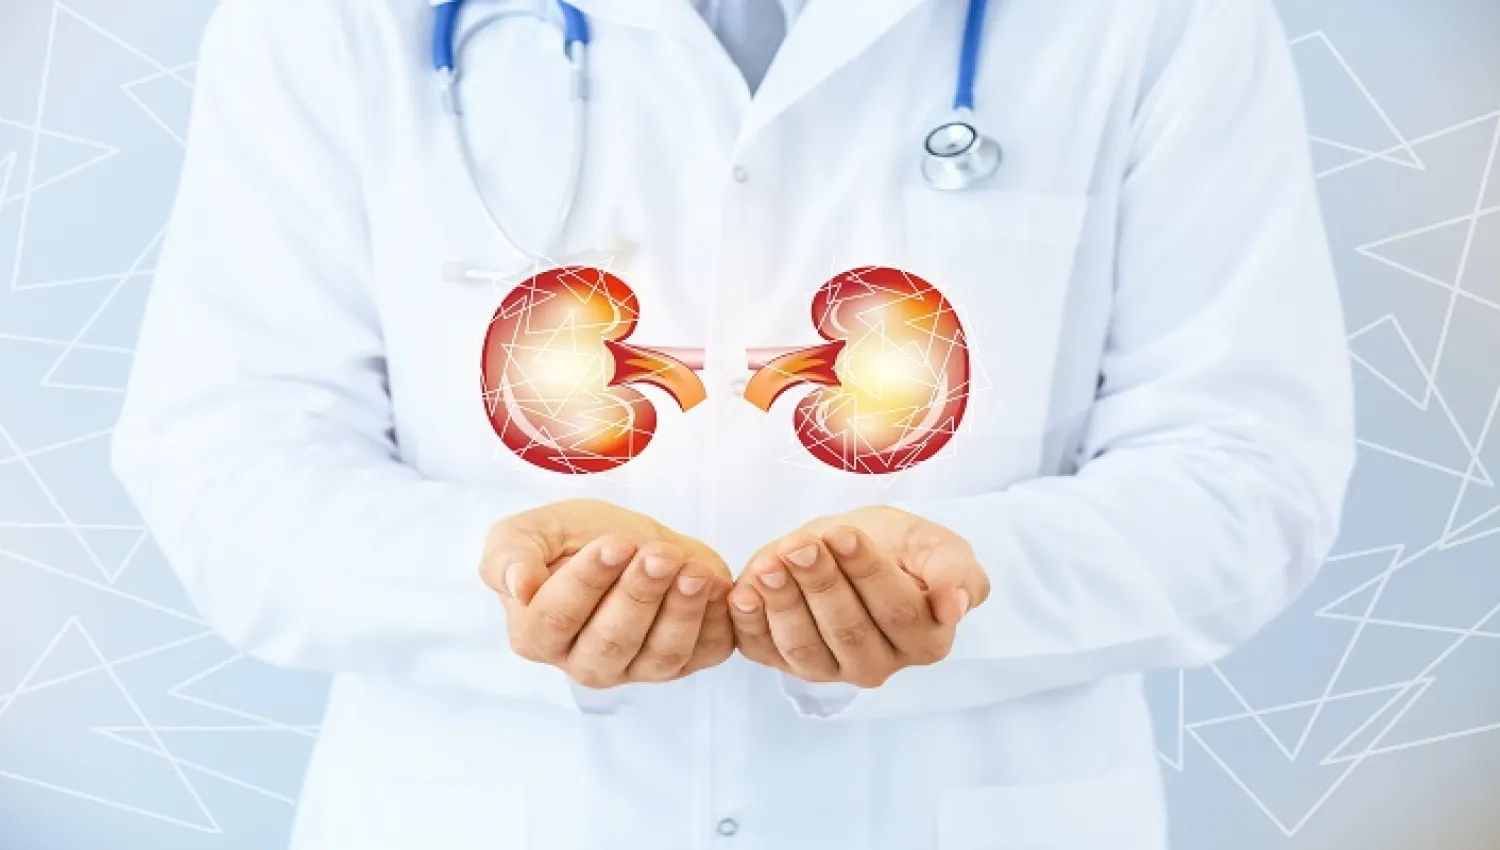 Ways to Get Rid of Kidney Stones